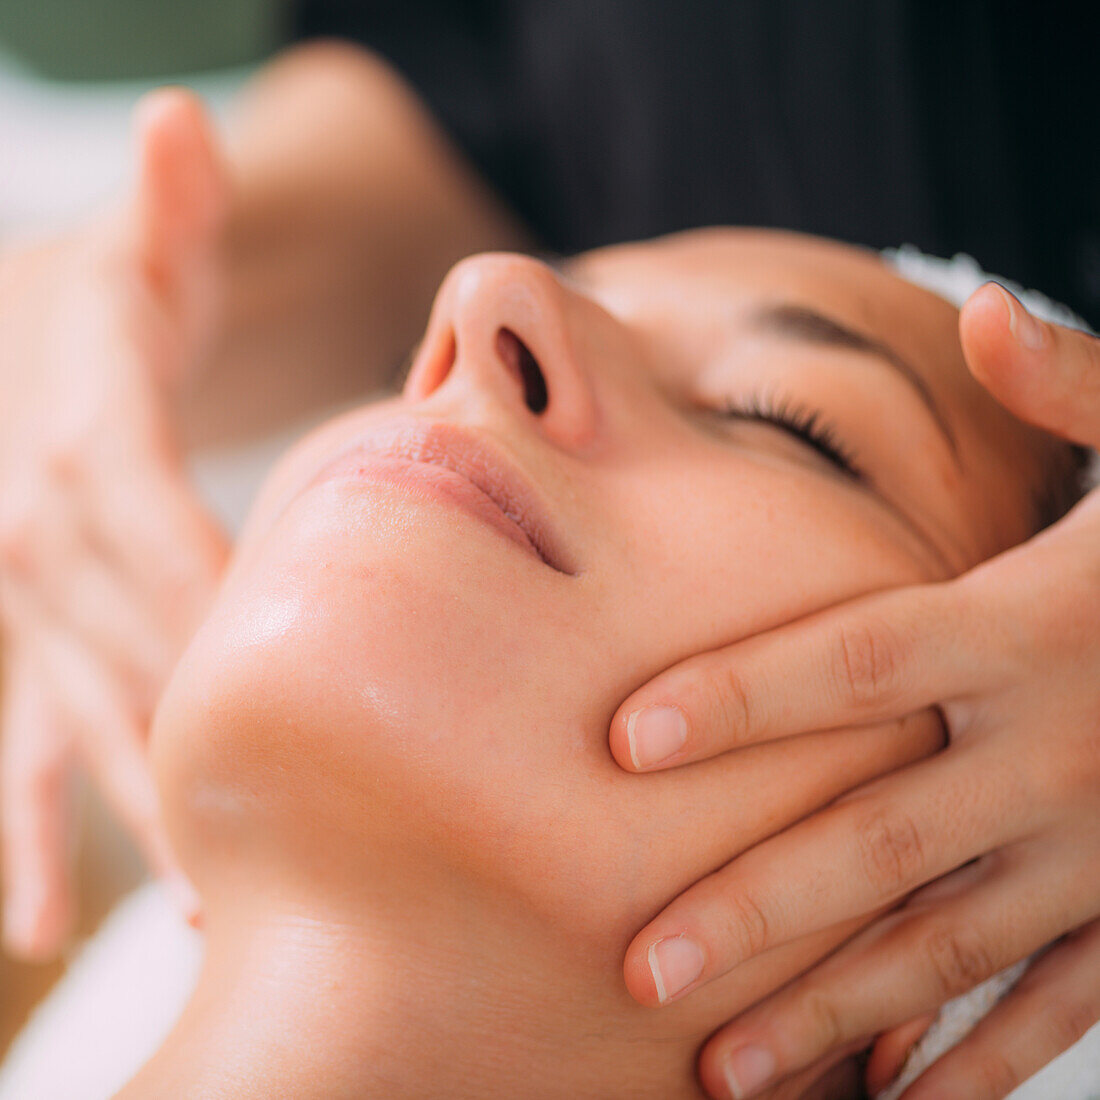 Enjoying ayurvedic facial massage with essential oils